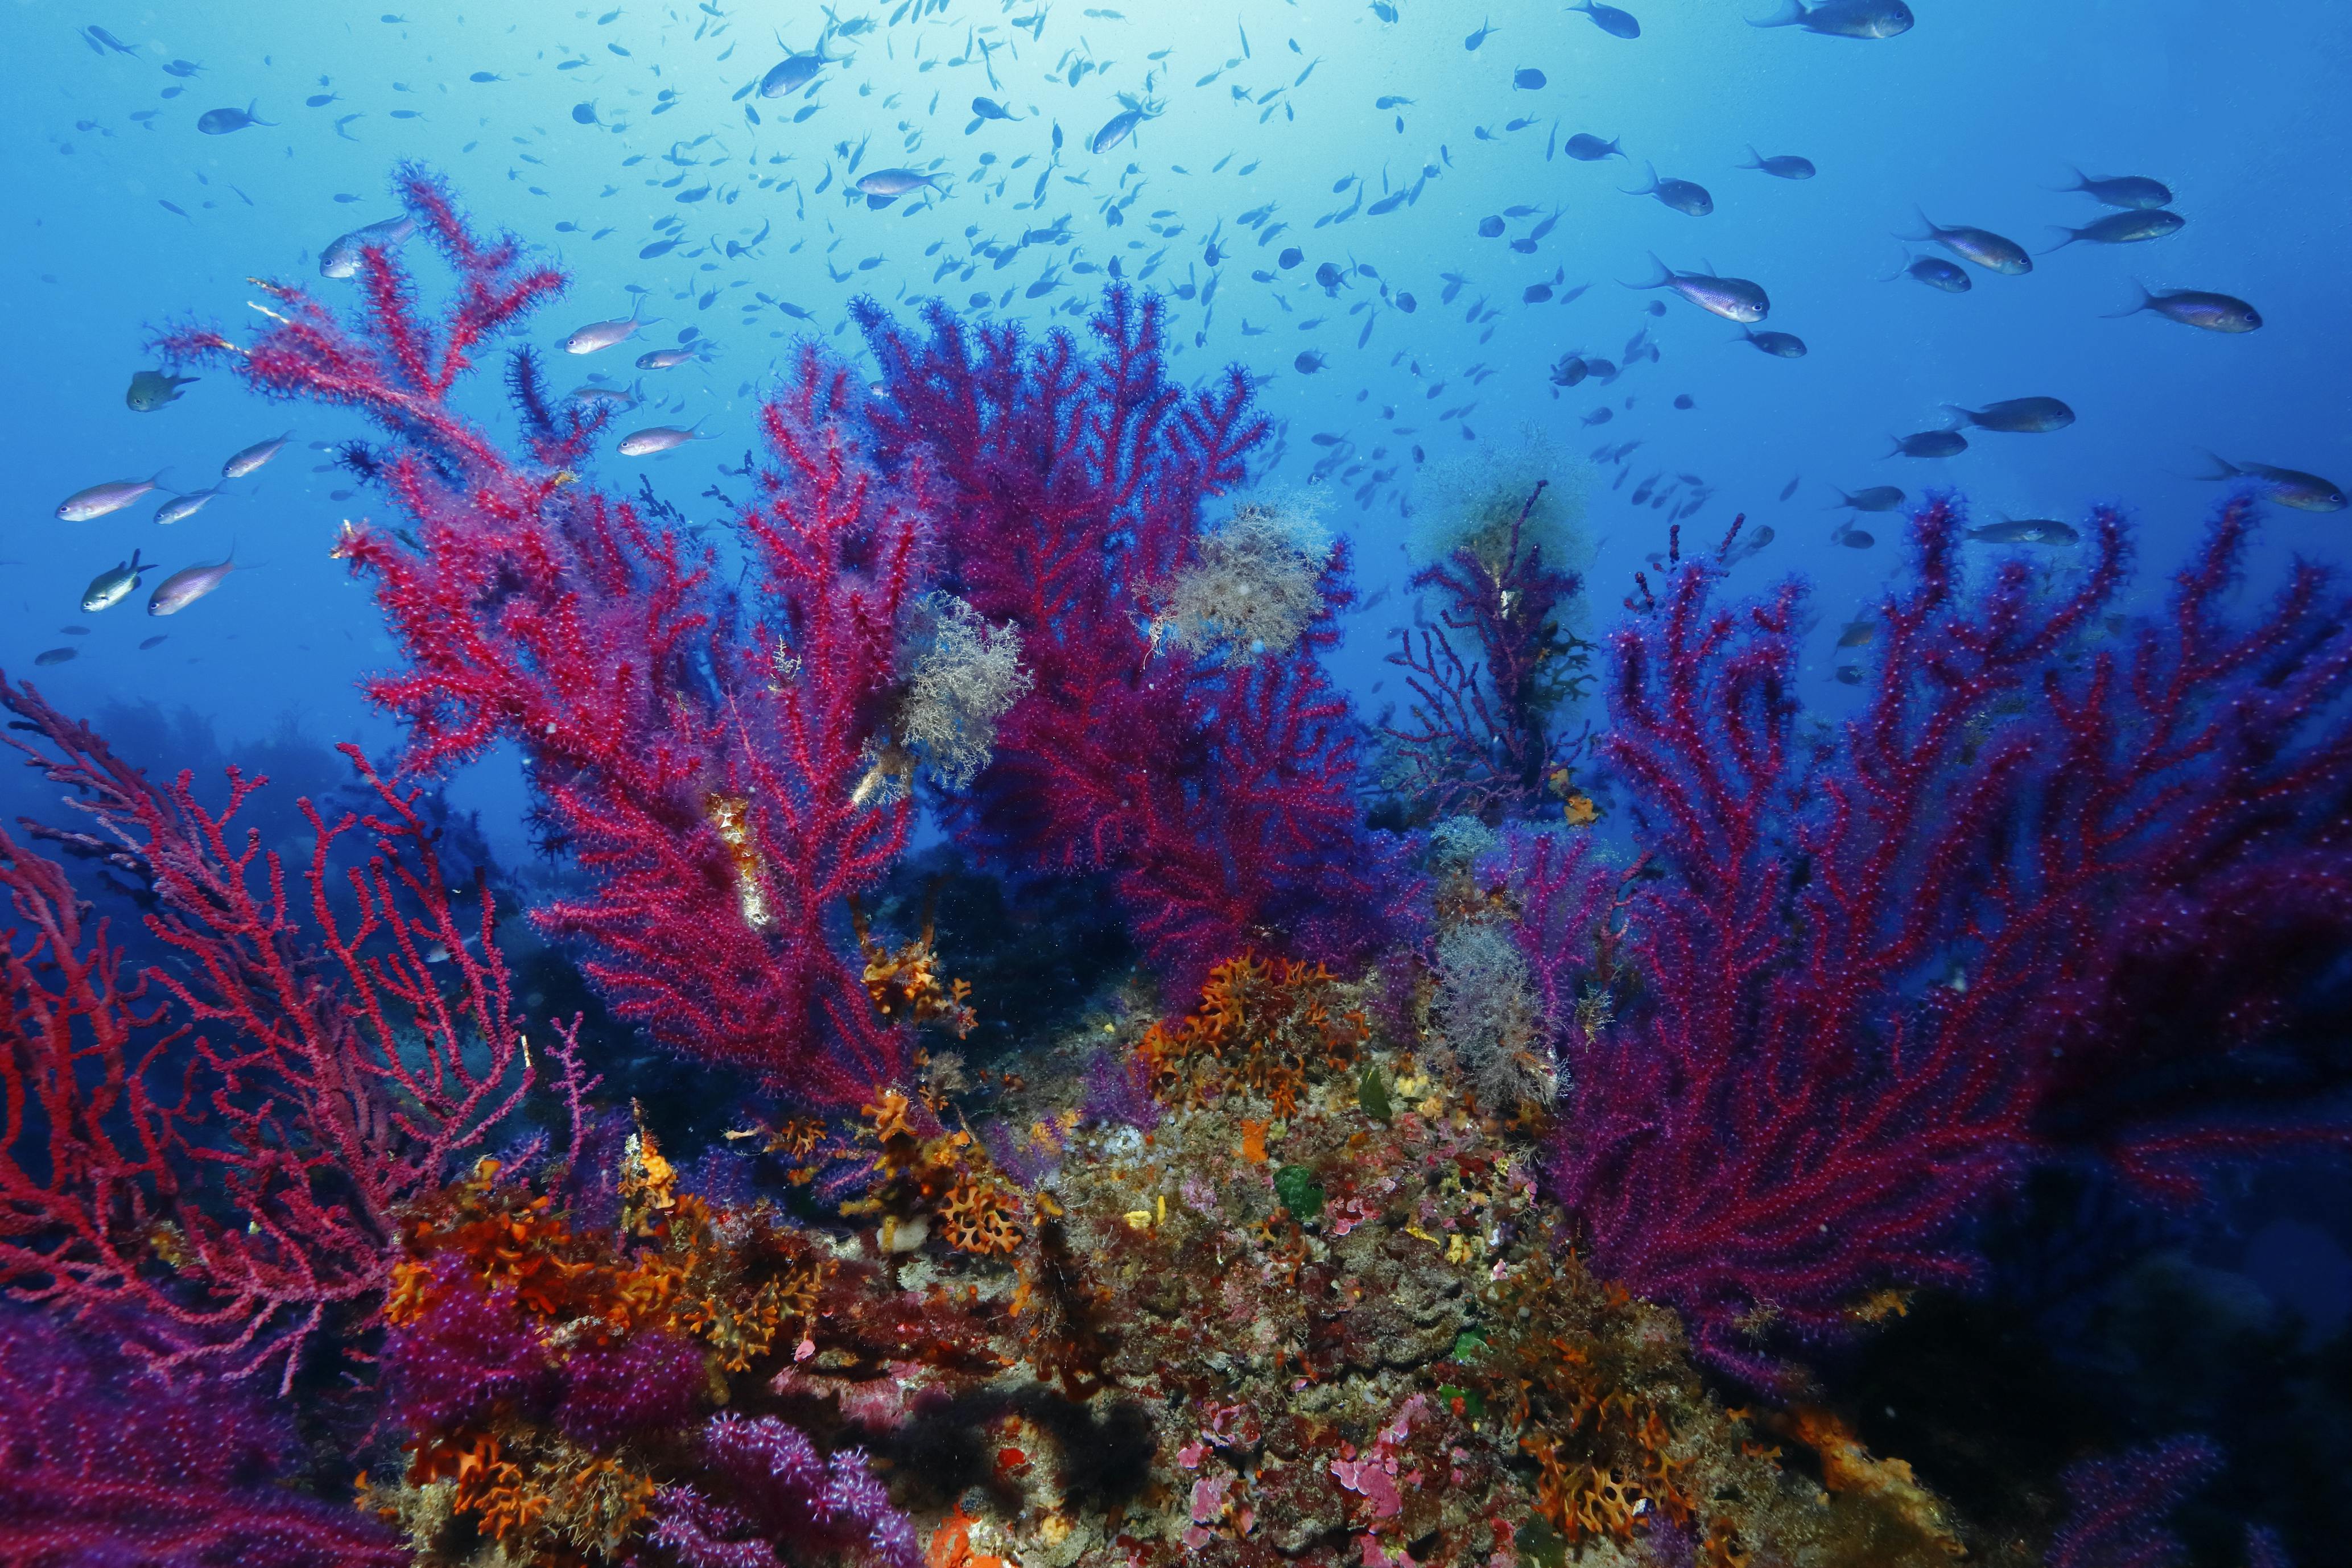 Blue economy: New approaches to restoring marine biodiversity